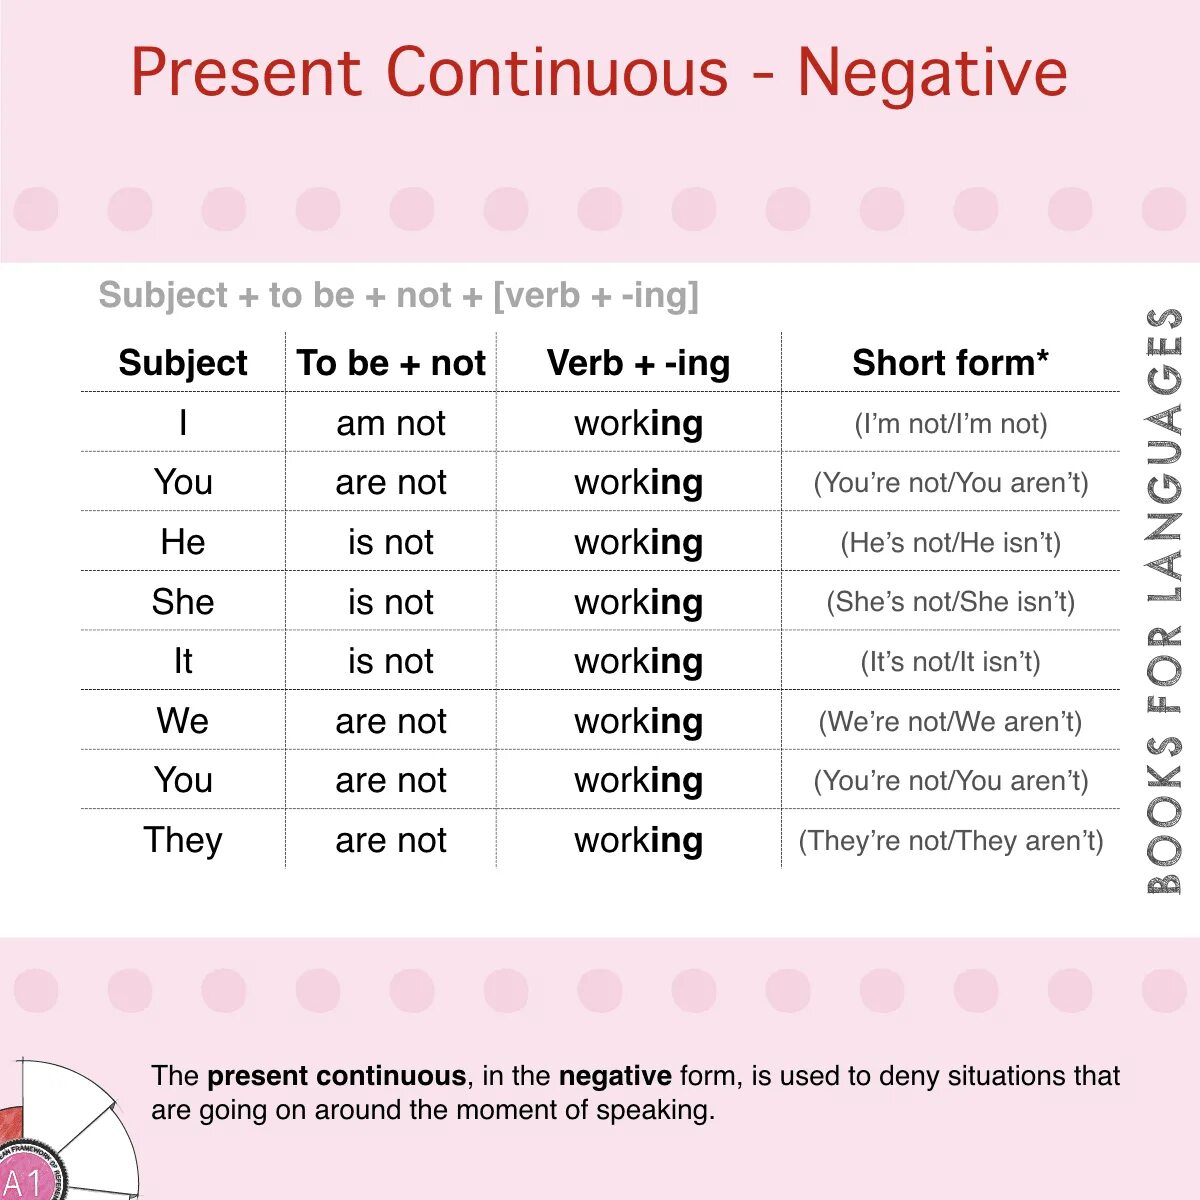 Check present continuous. Презент континиус. Present Continuous negative. Отрицательная форма present Continuous. Презент континиус негатив.